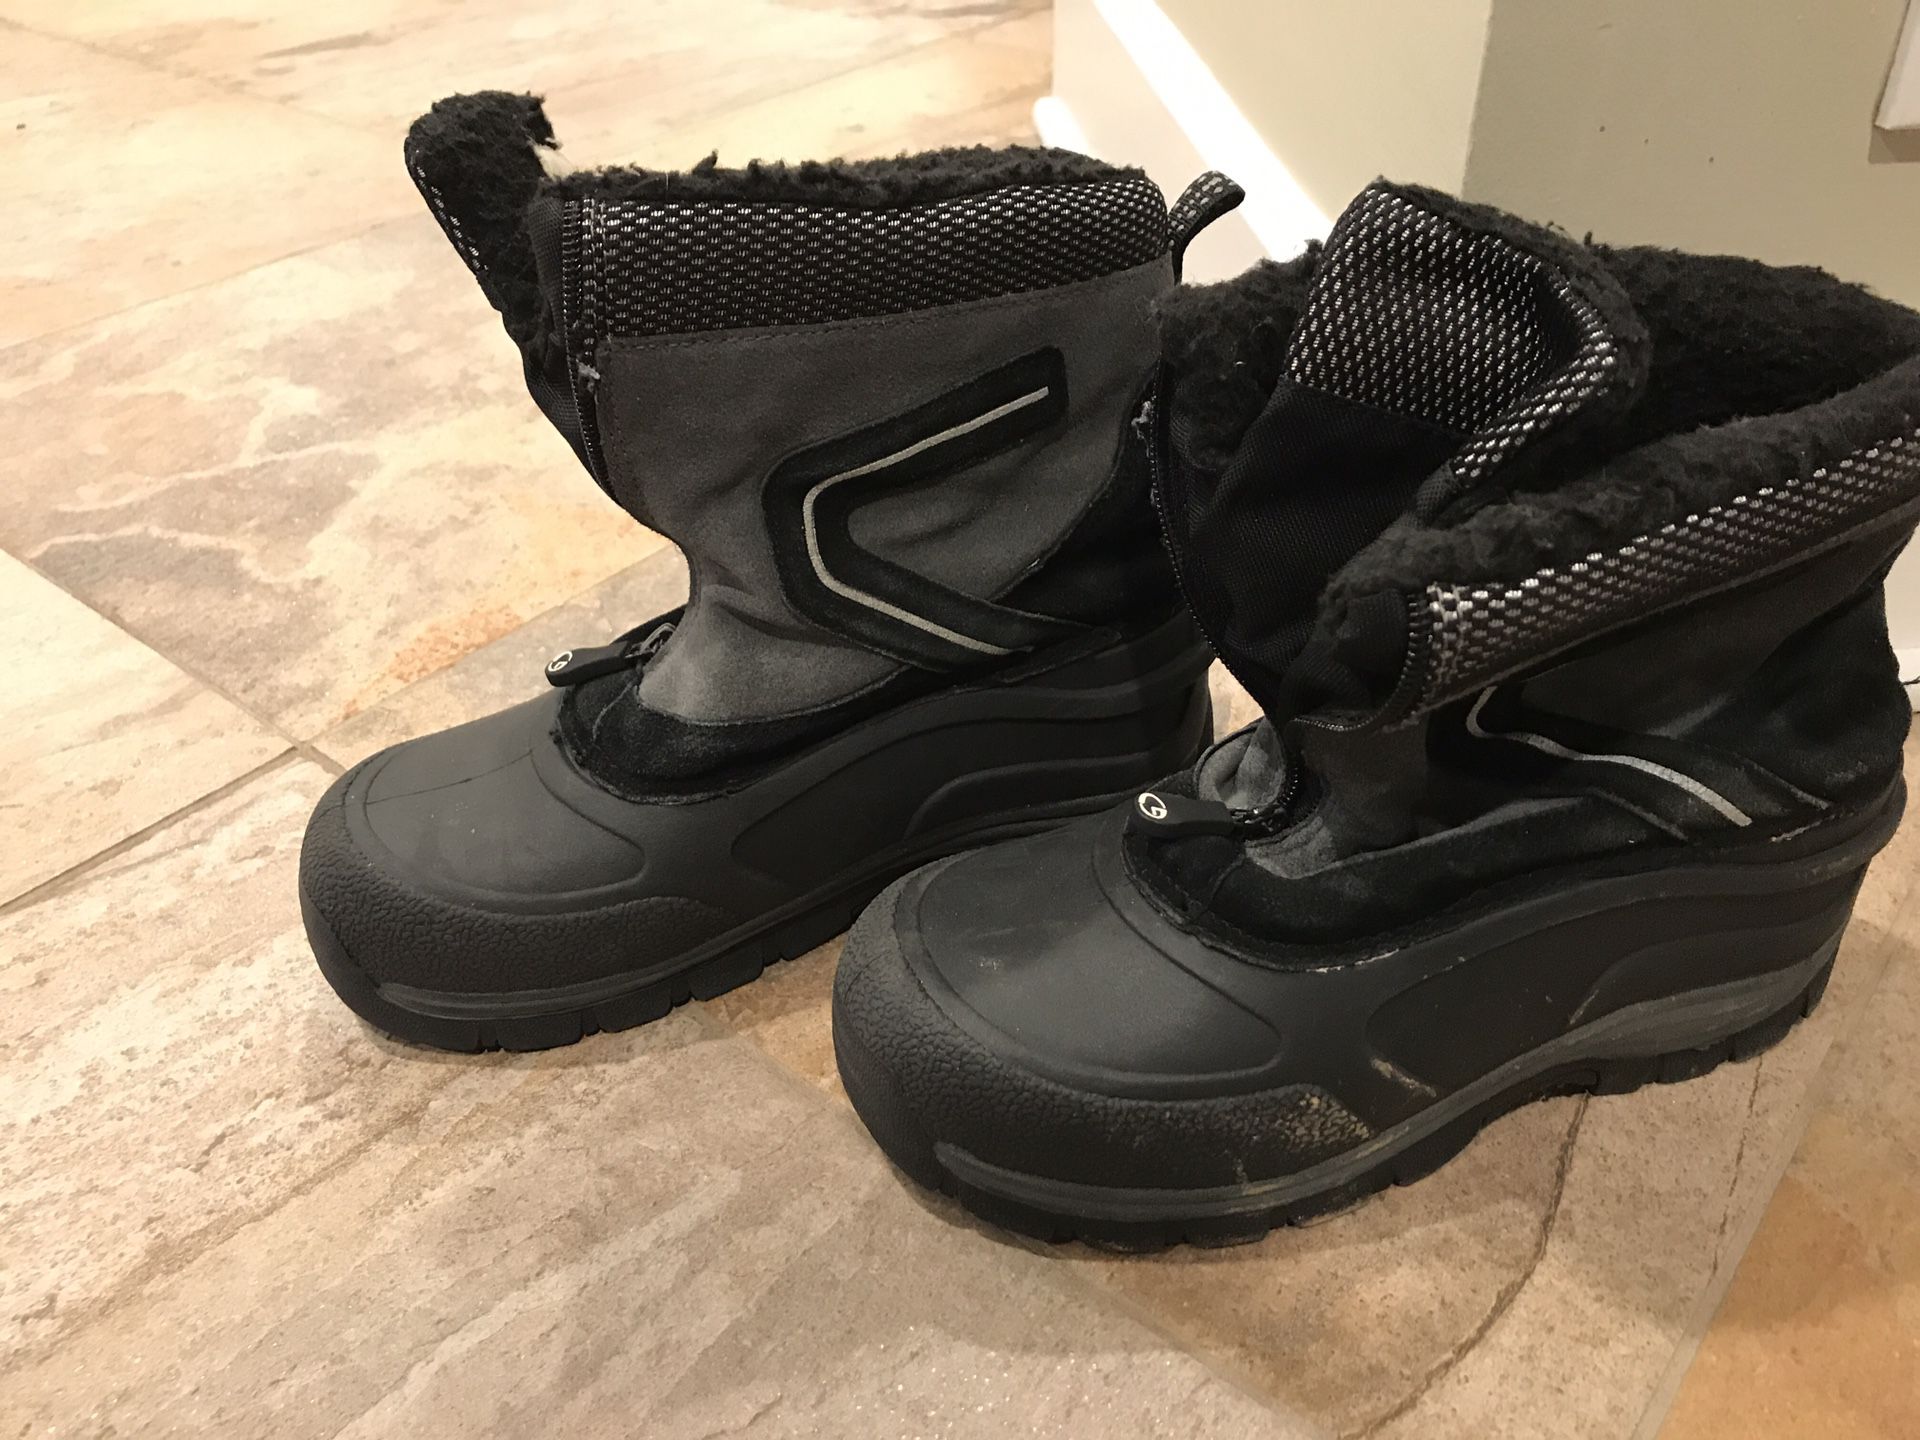 Snow boots - boys size 6